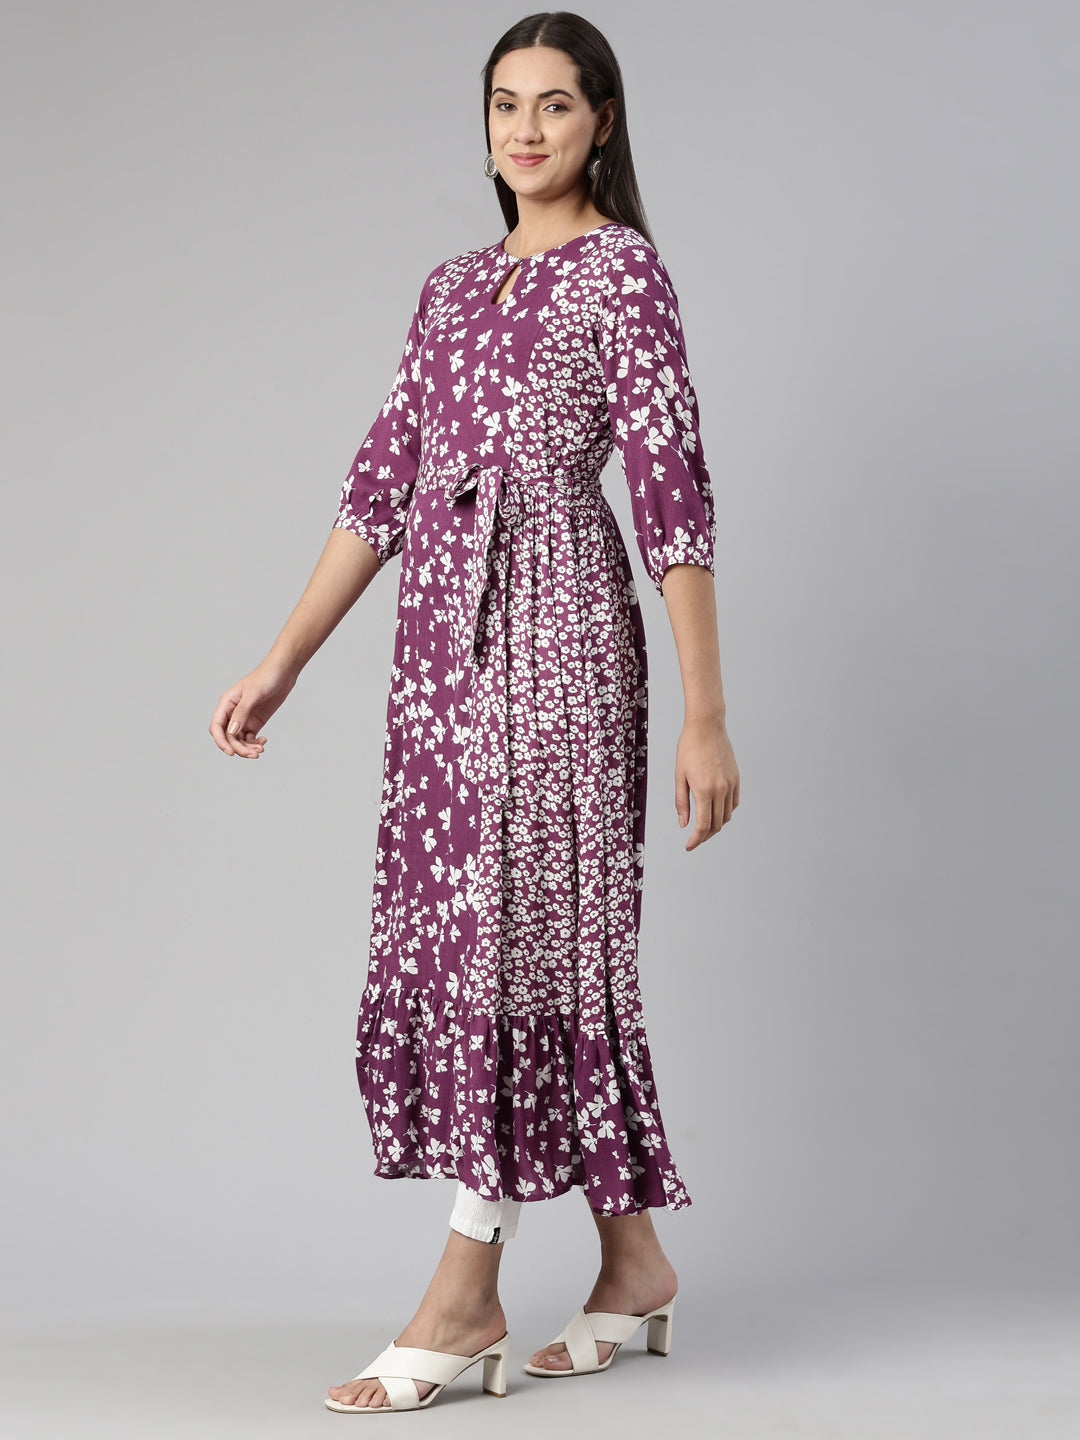 Neerus Purple Floral Keyhole Neck Chiffon Ethnic A-Line Midi Dress